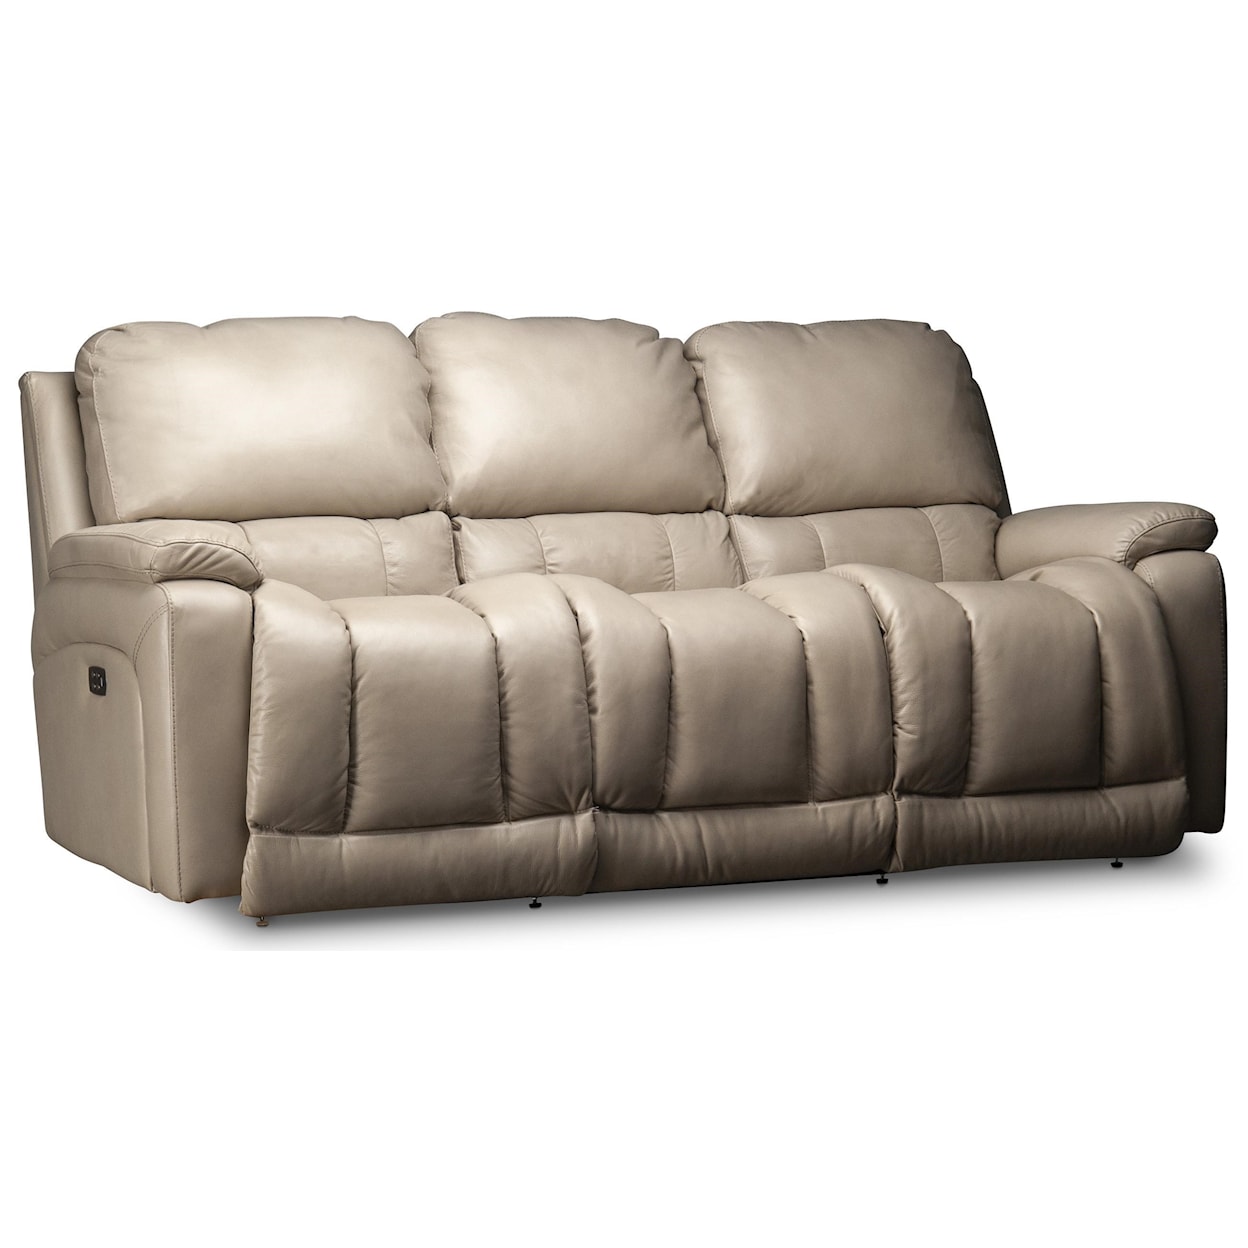 La-Z-Boy Greyson Greyson Leather Power Sofa